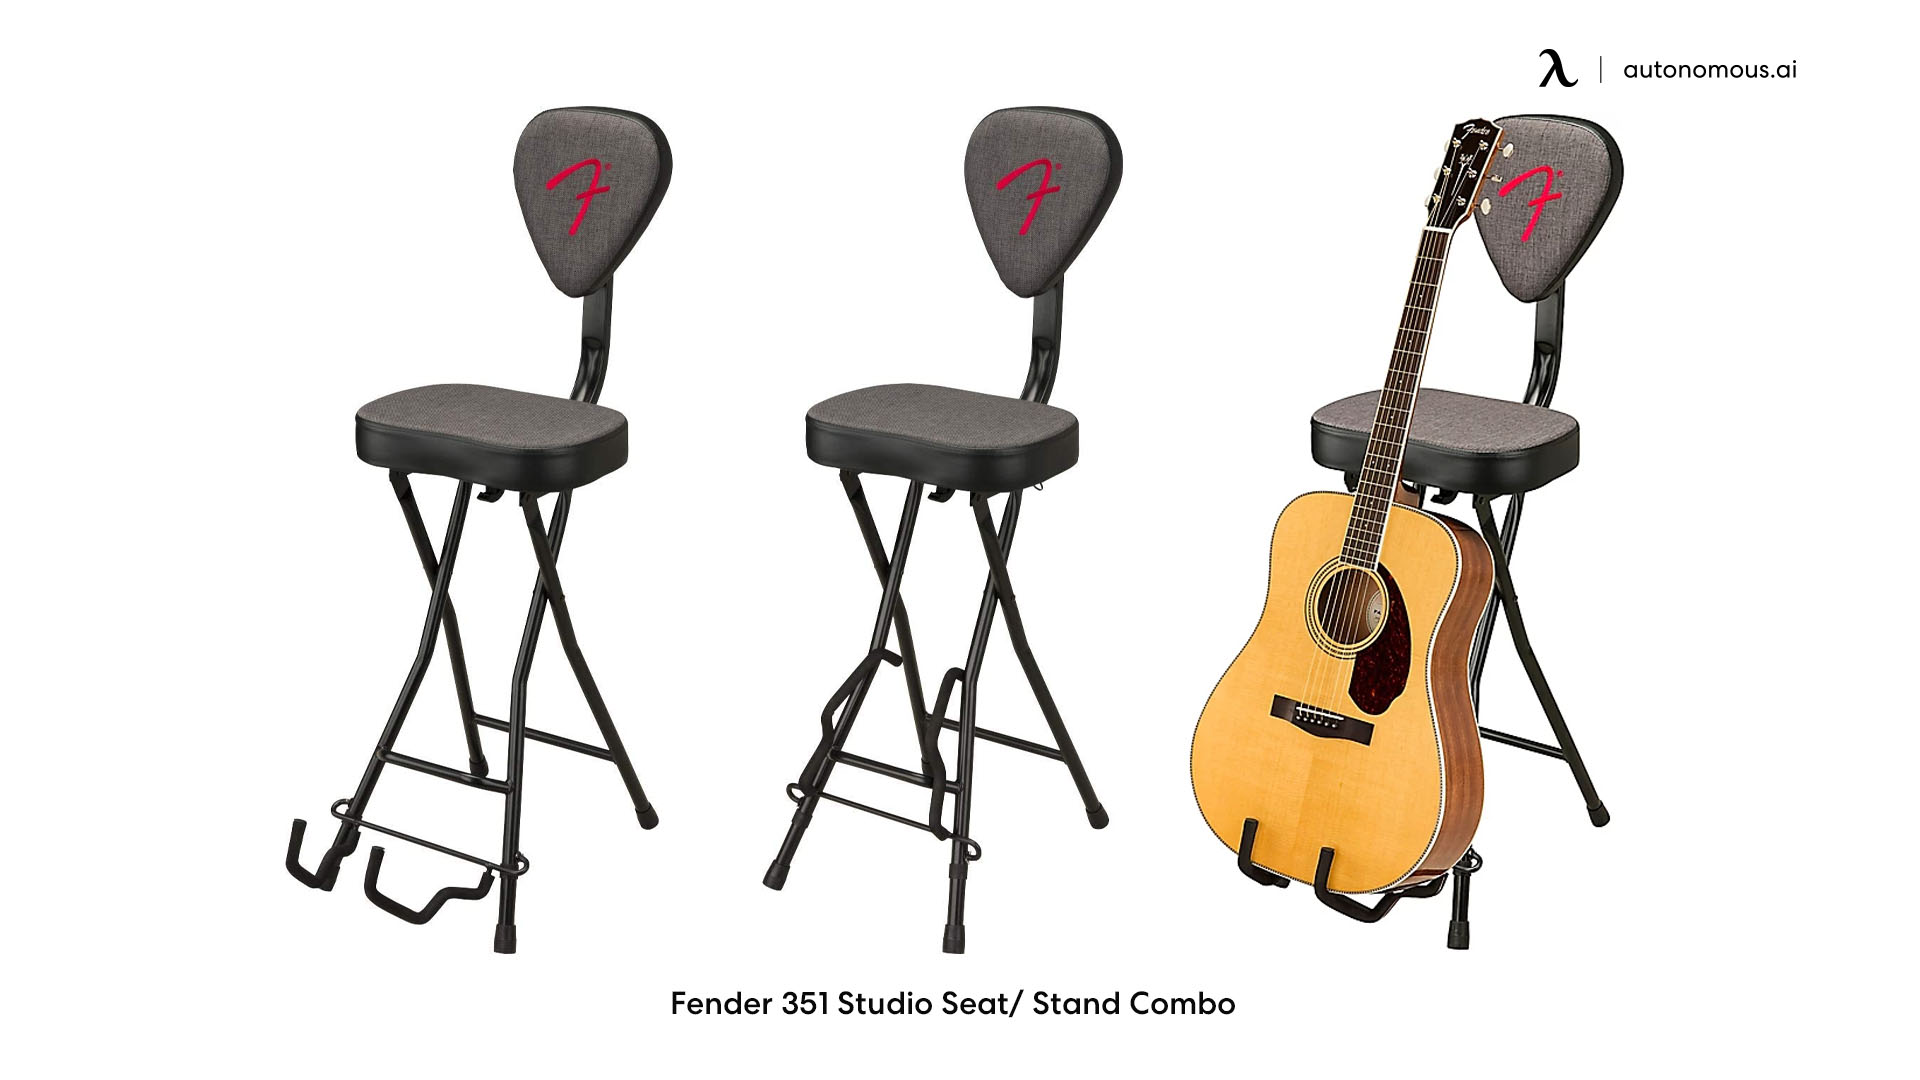 Fender 351 Studio Seat/ Stand Combo studio chair